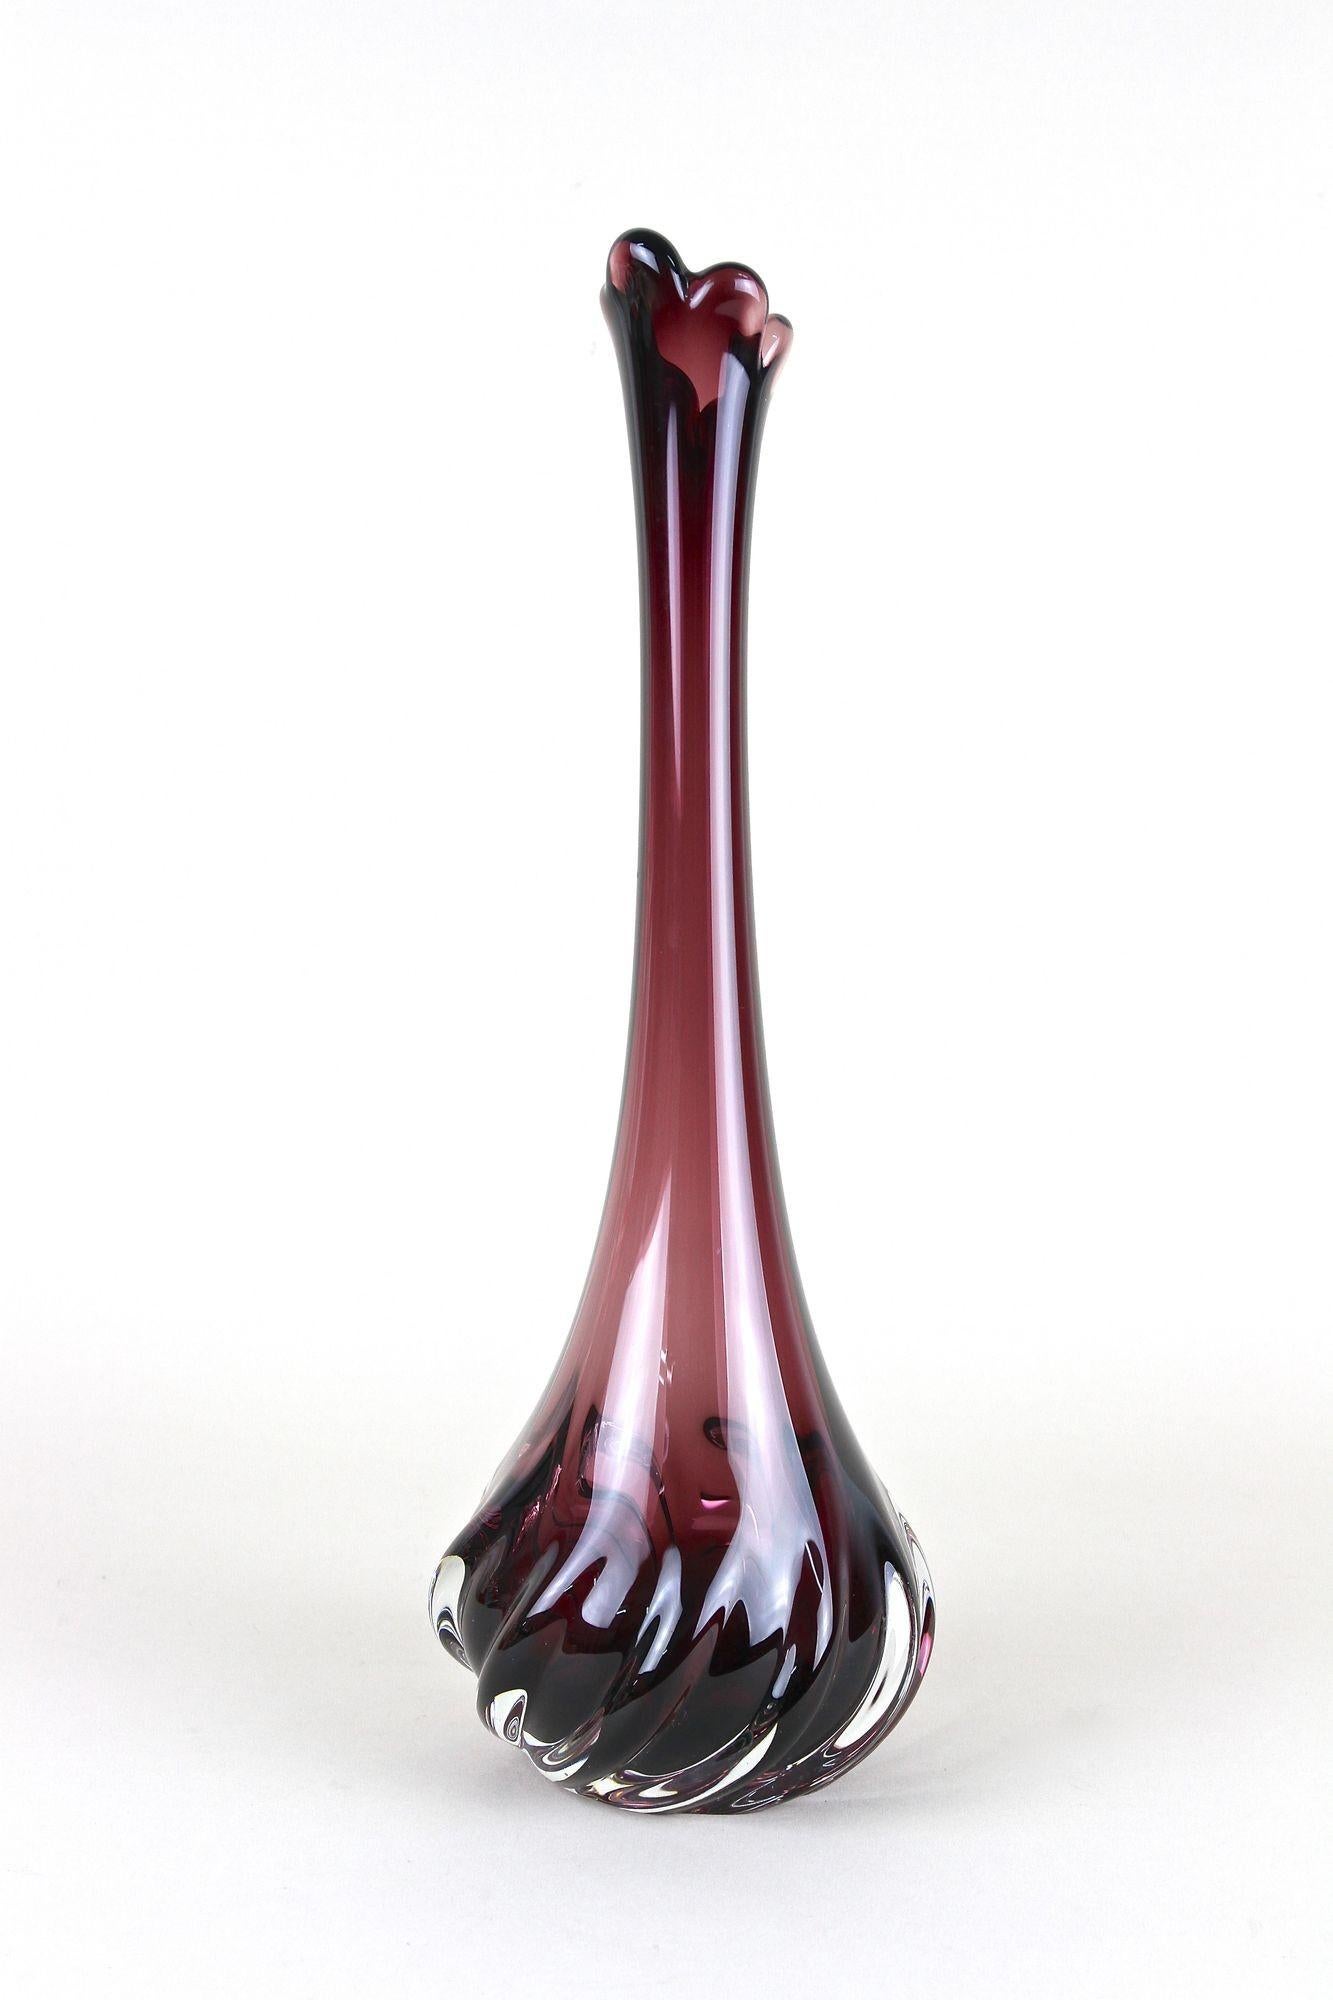 Bordeauxrote Murano-Glasvase mit langem Hals, 20. Jahrhundert, Italien um 1970 (Muranoglas) im Angebot